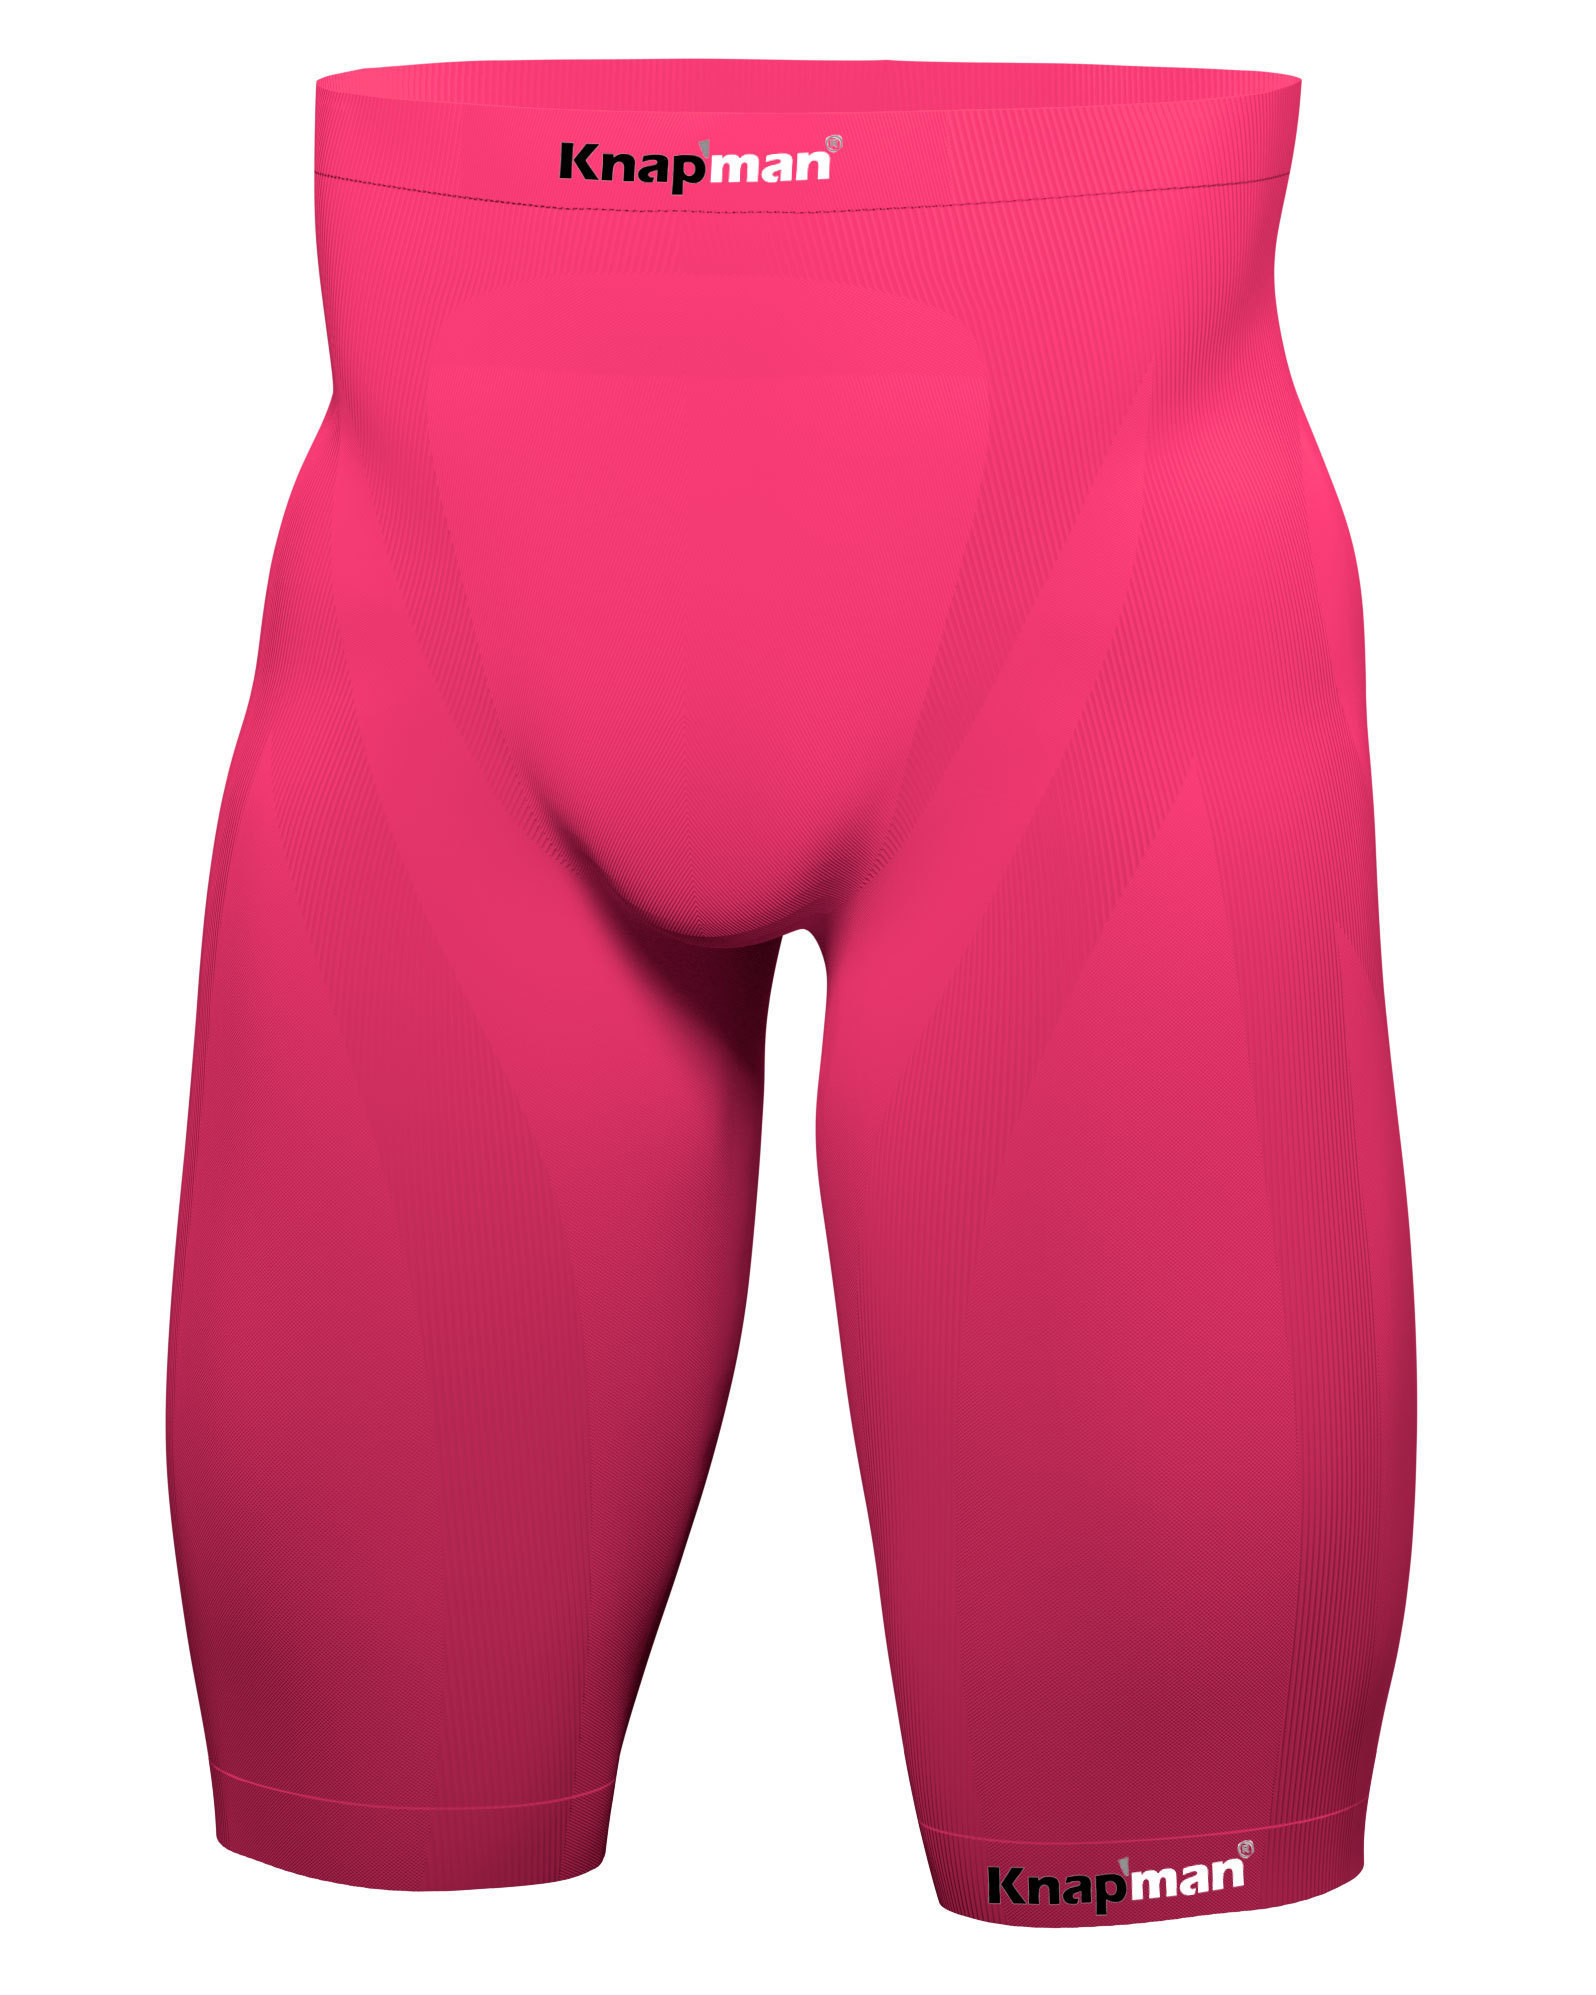 Knap'man Shop  Knap'man Compression Shorts USP 45% Pink